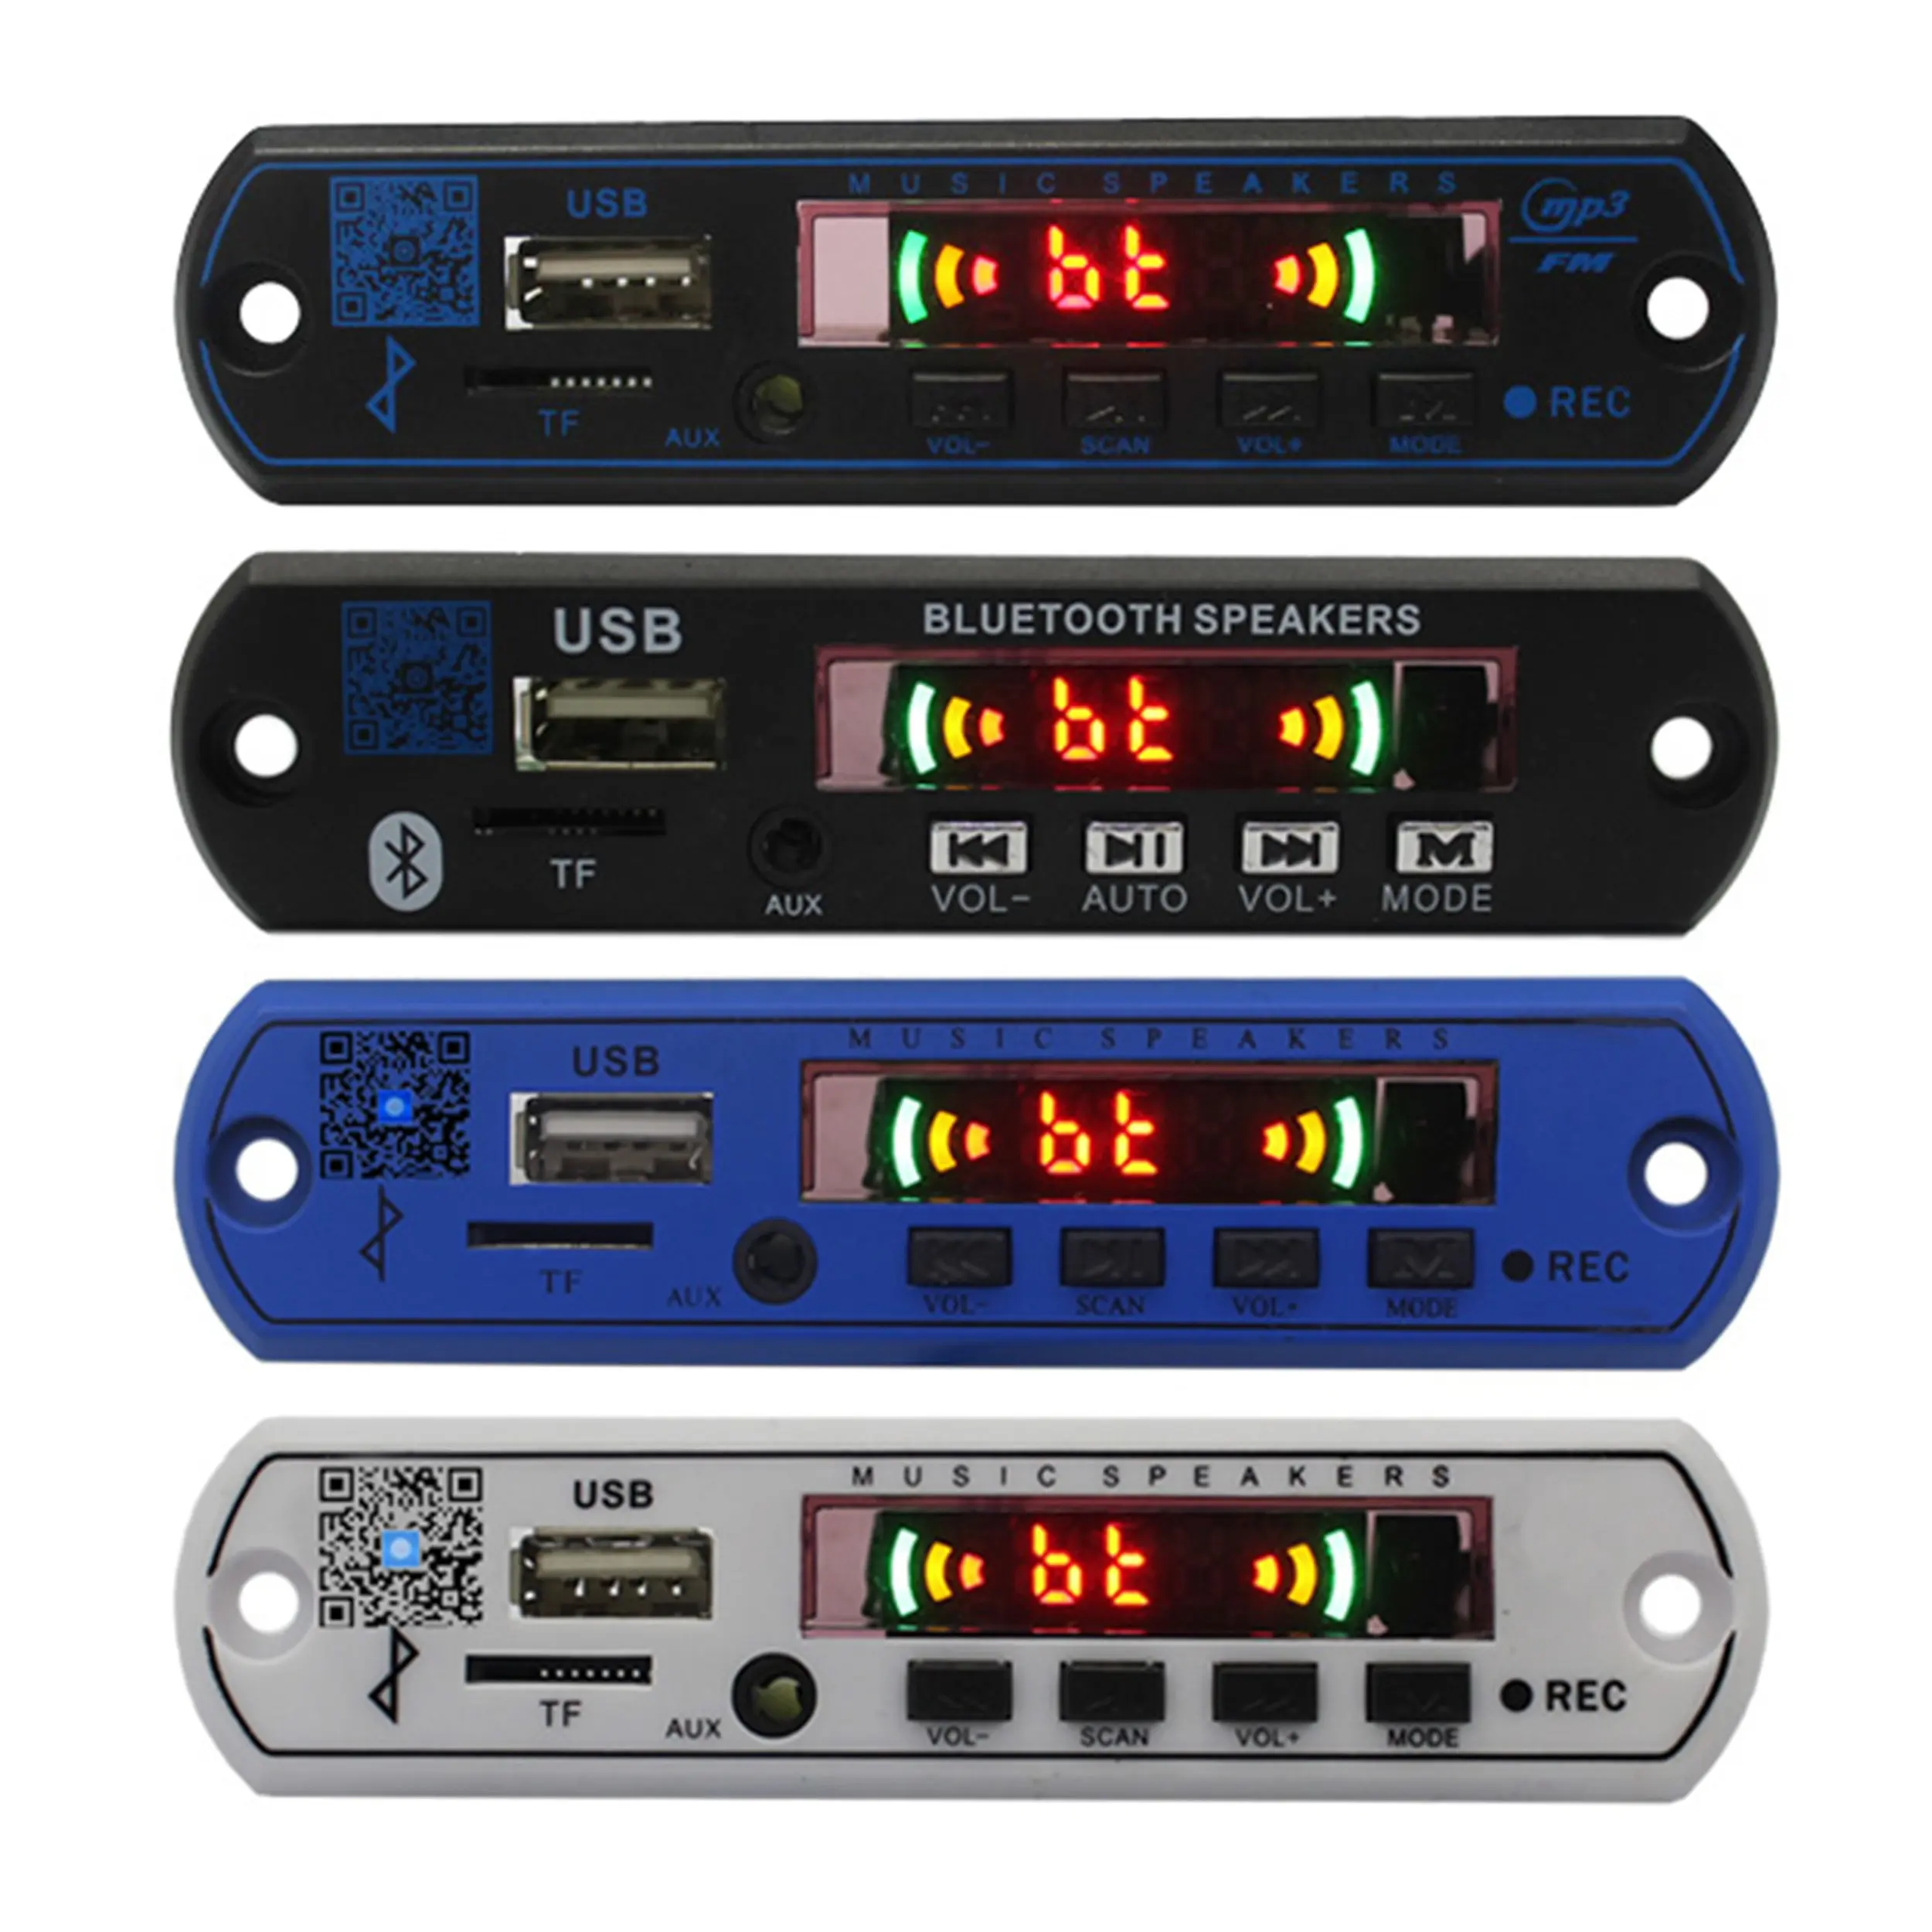 CX-9.0 5V FM Raio Bt MP3 модуль для MP3 плеер, JLH Bt декодер доска аудио декодер модуль